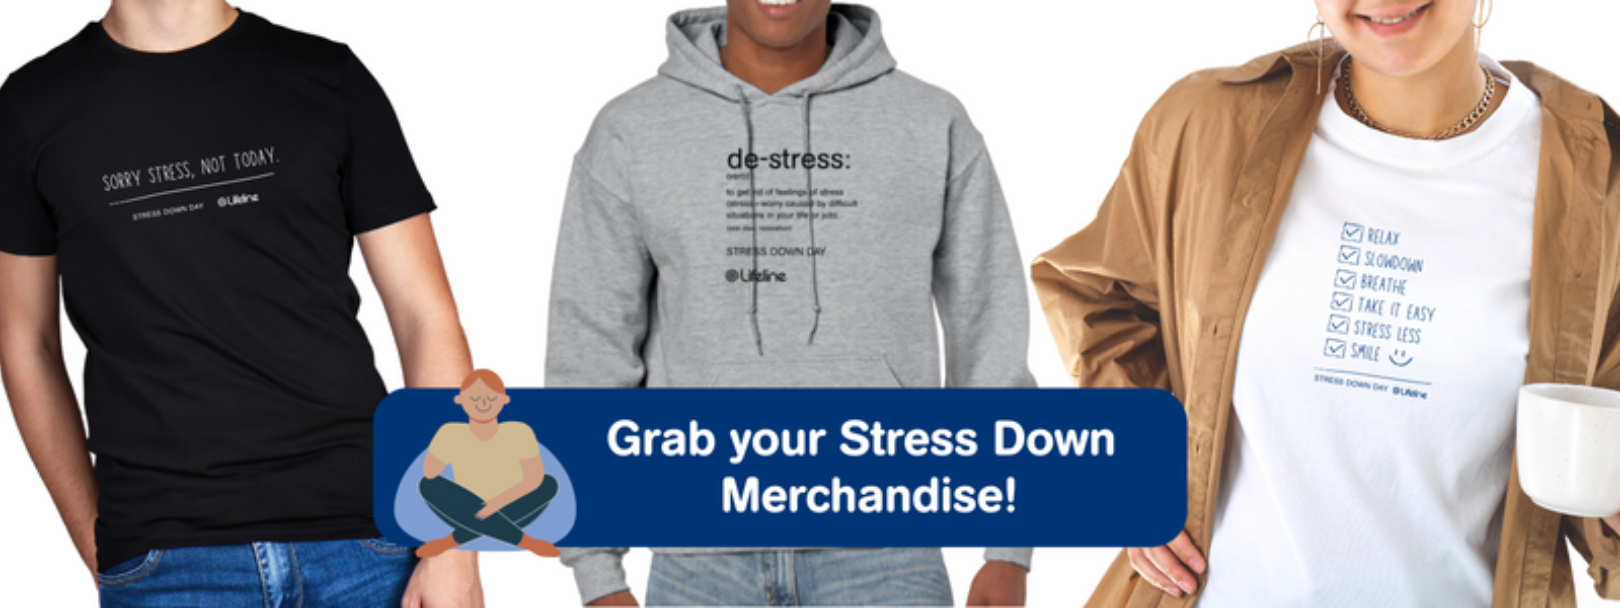 Grab your Stress Down Lifeline Merchandise